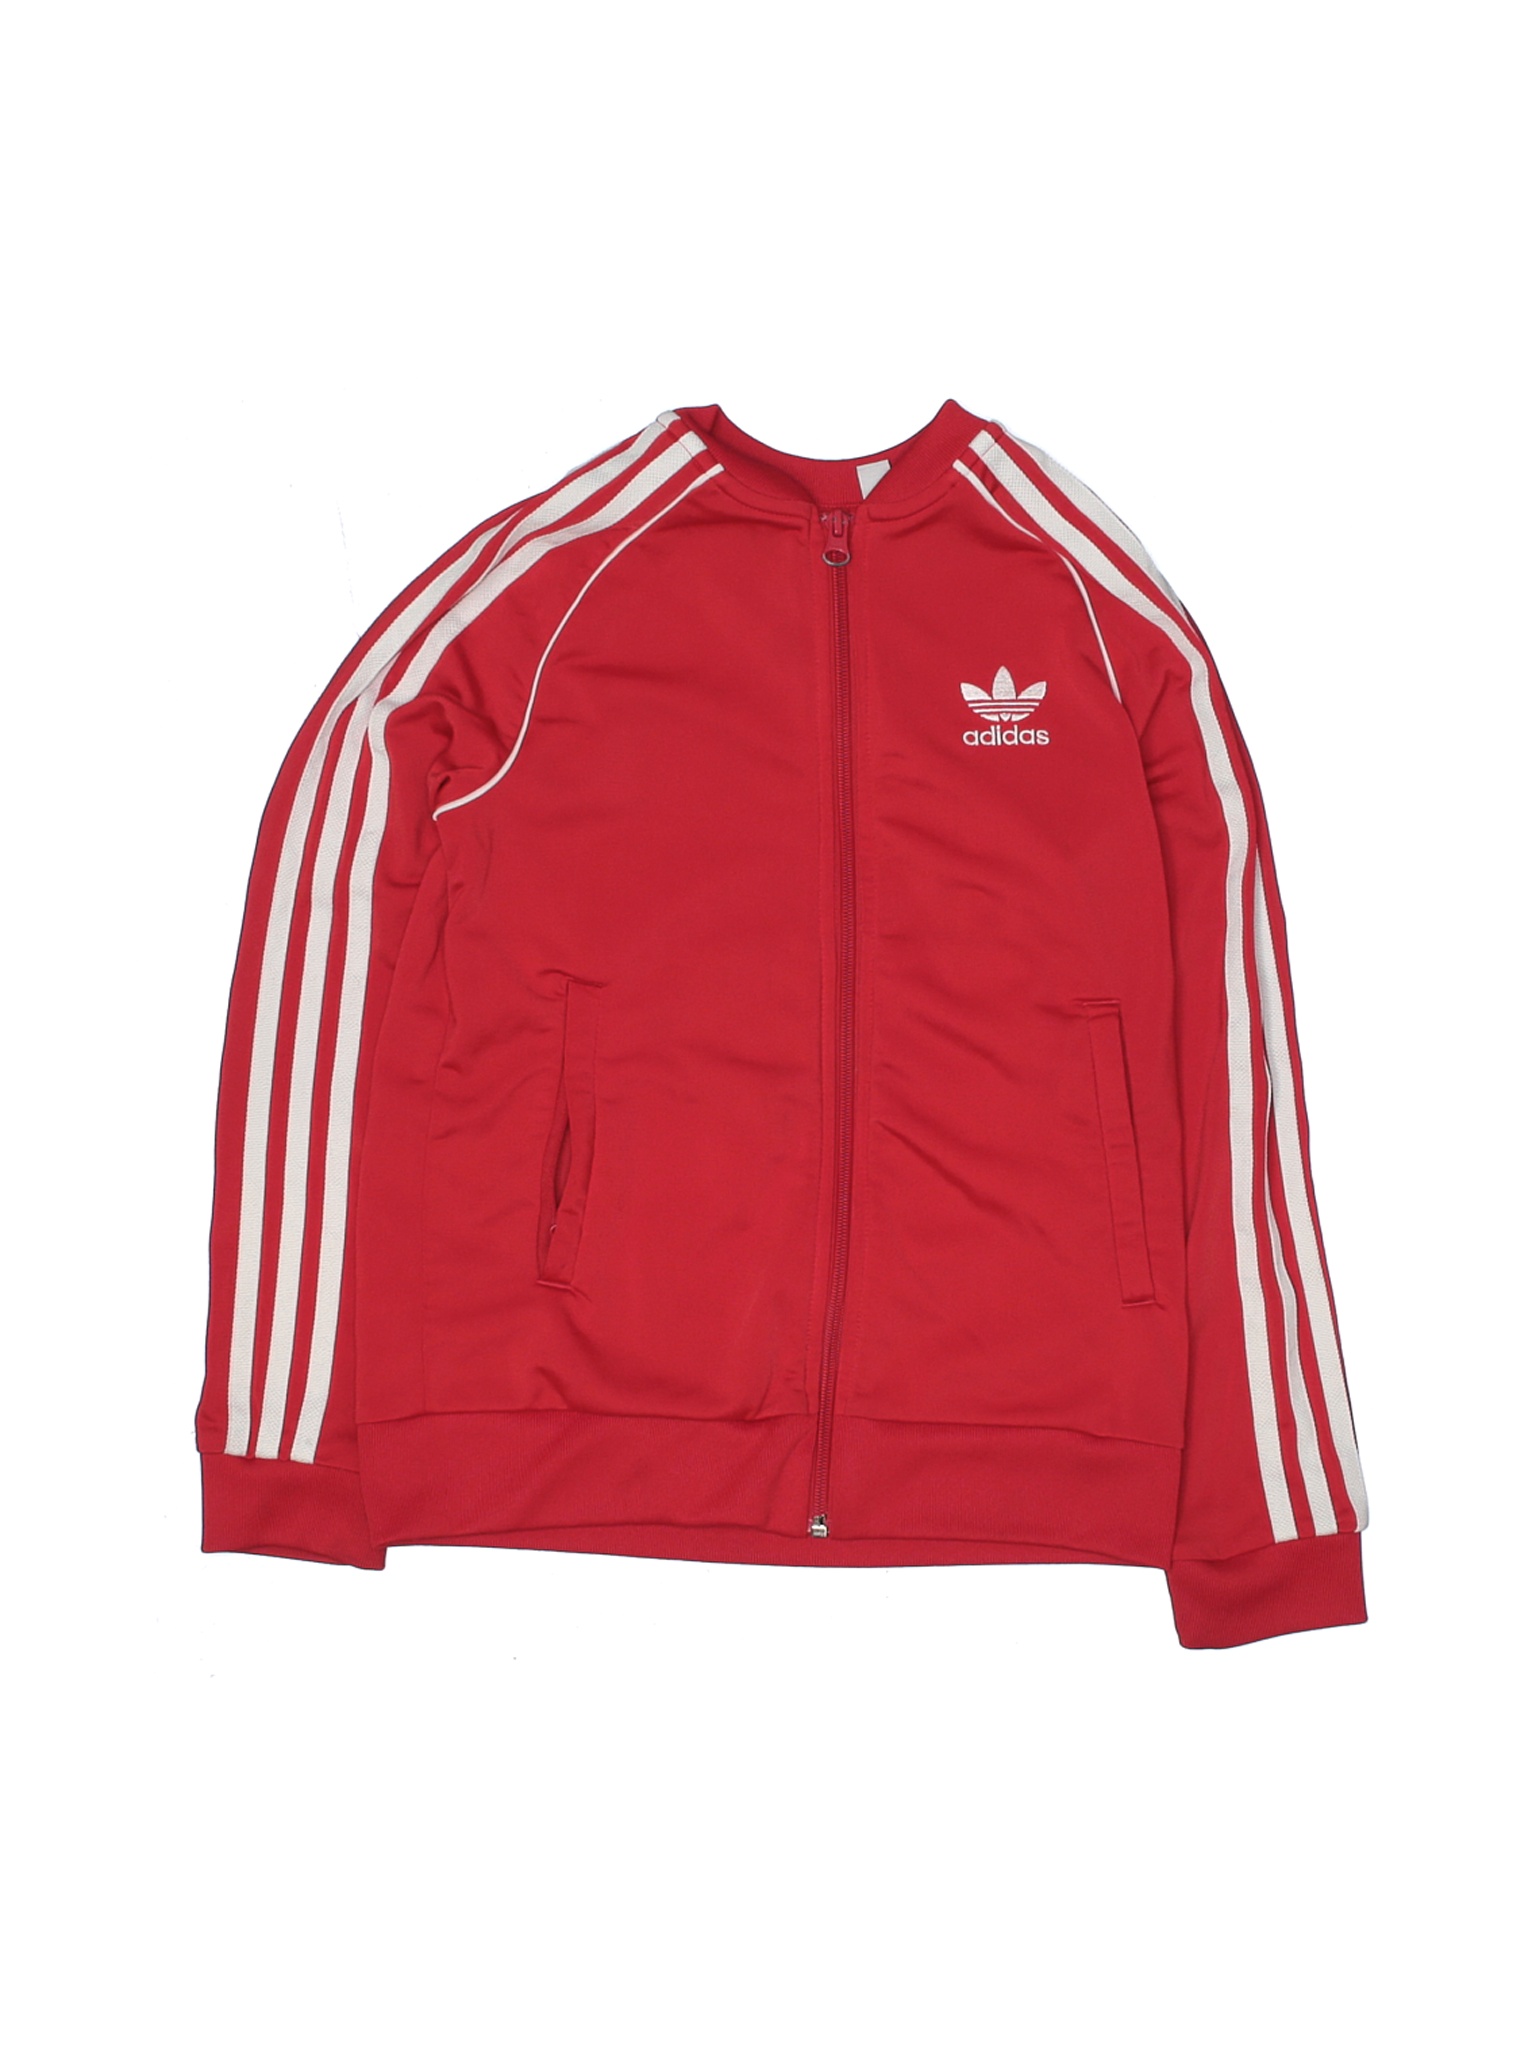 Adidas Boys Red Track Jacket S Youth | eBay